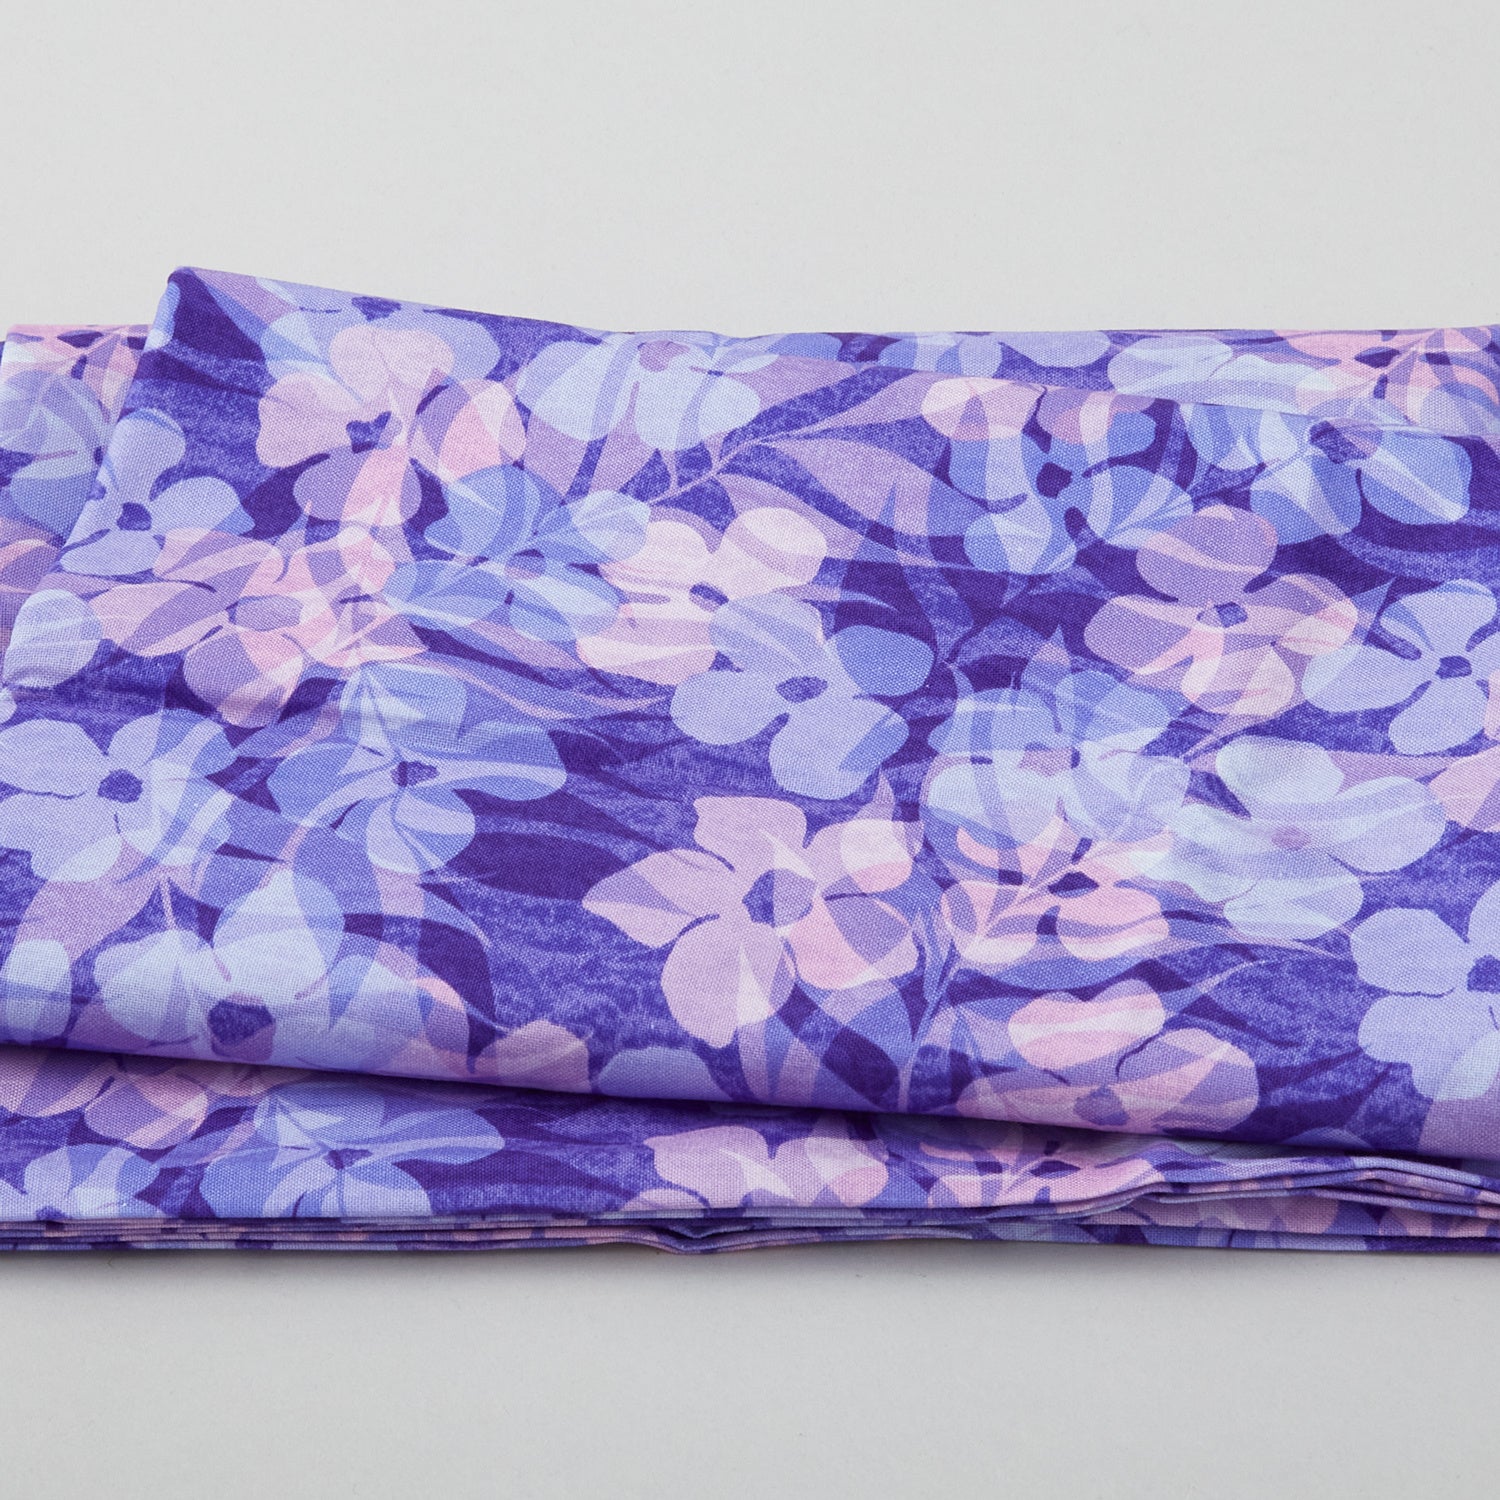 Kona Cotton Noble Purple Solid Fabric